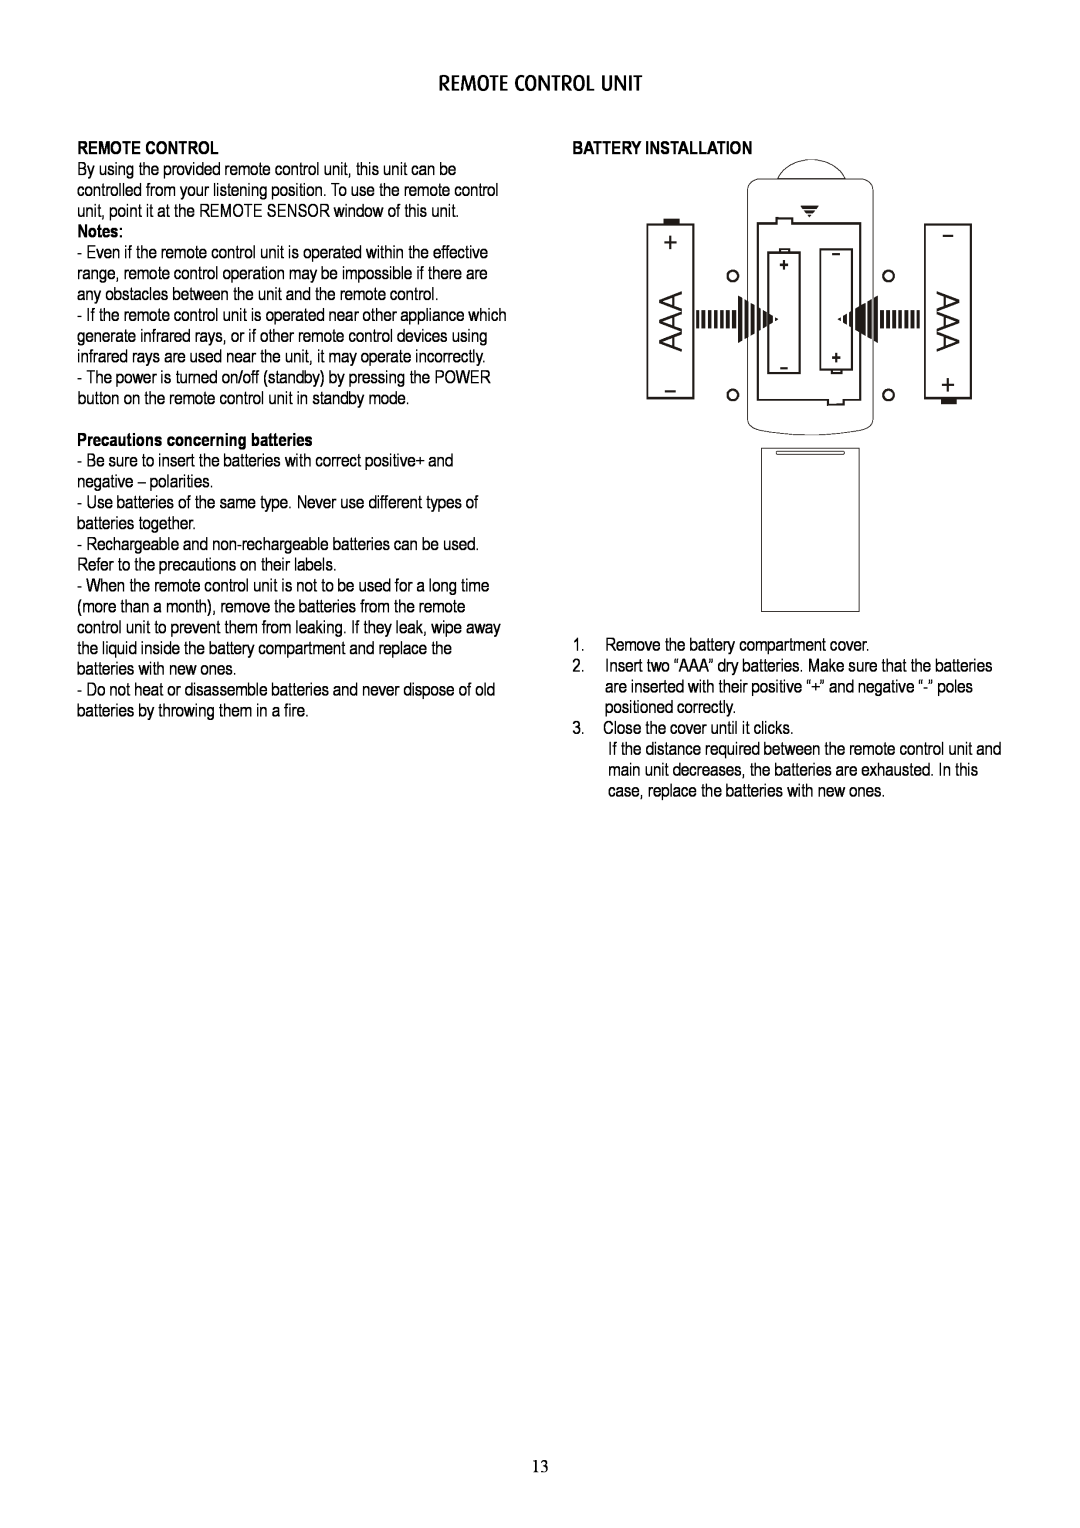 Eltax AVR-320 instruction manual Remote Control Unit, Precautions concerning batteries, Battery Installation 